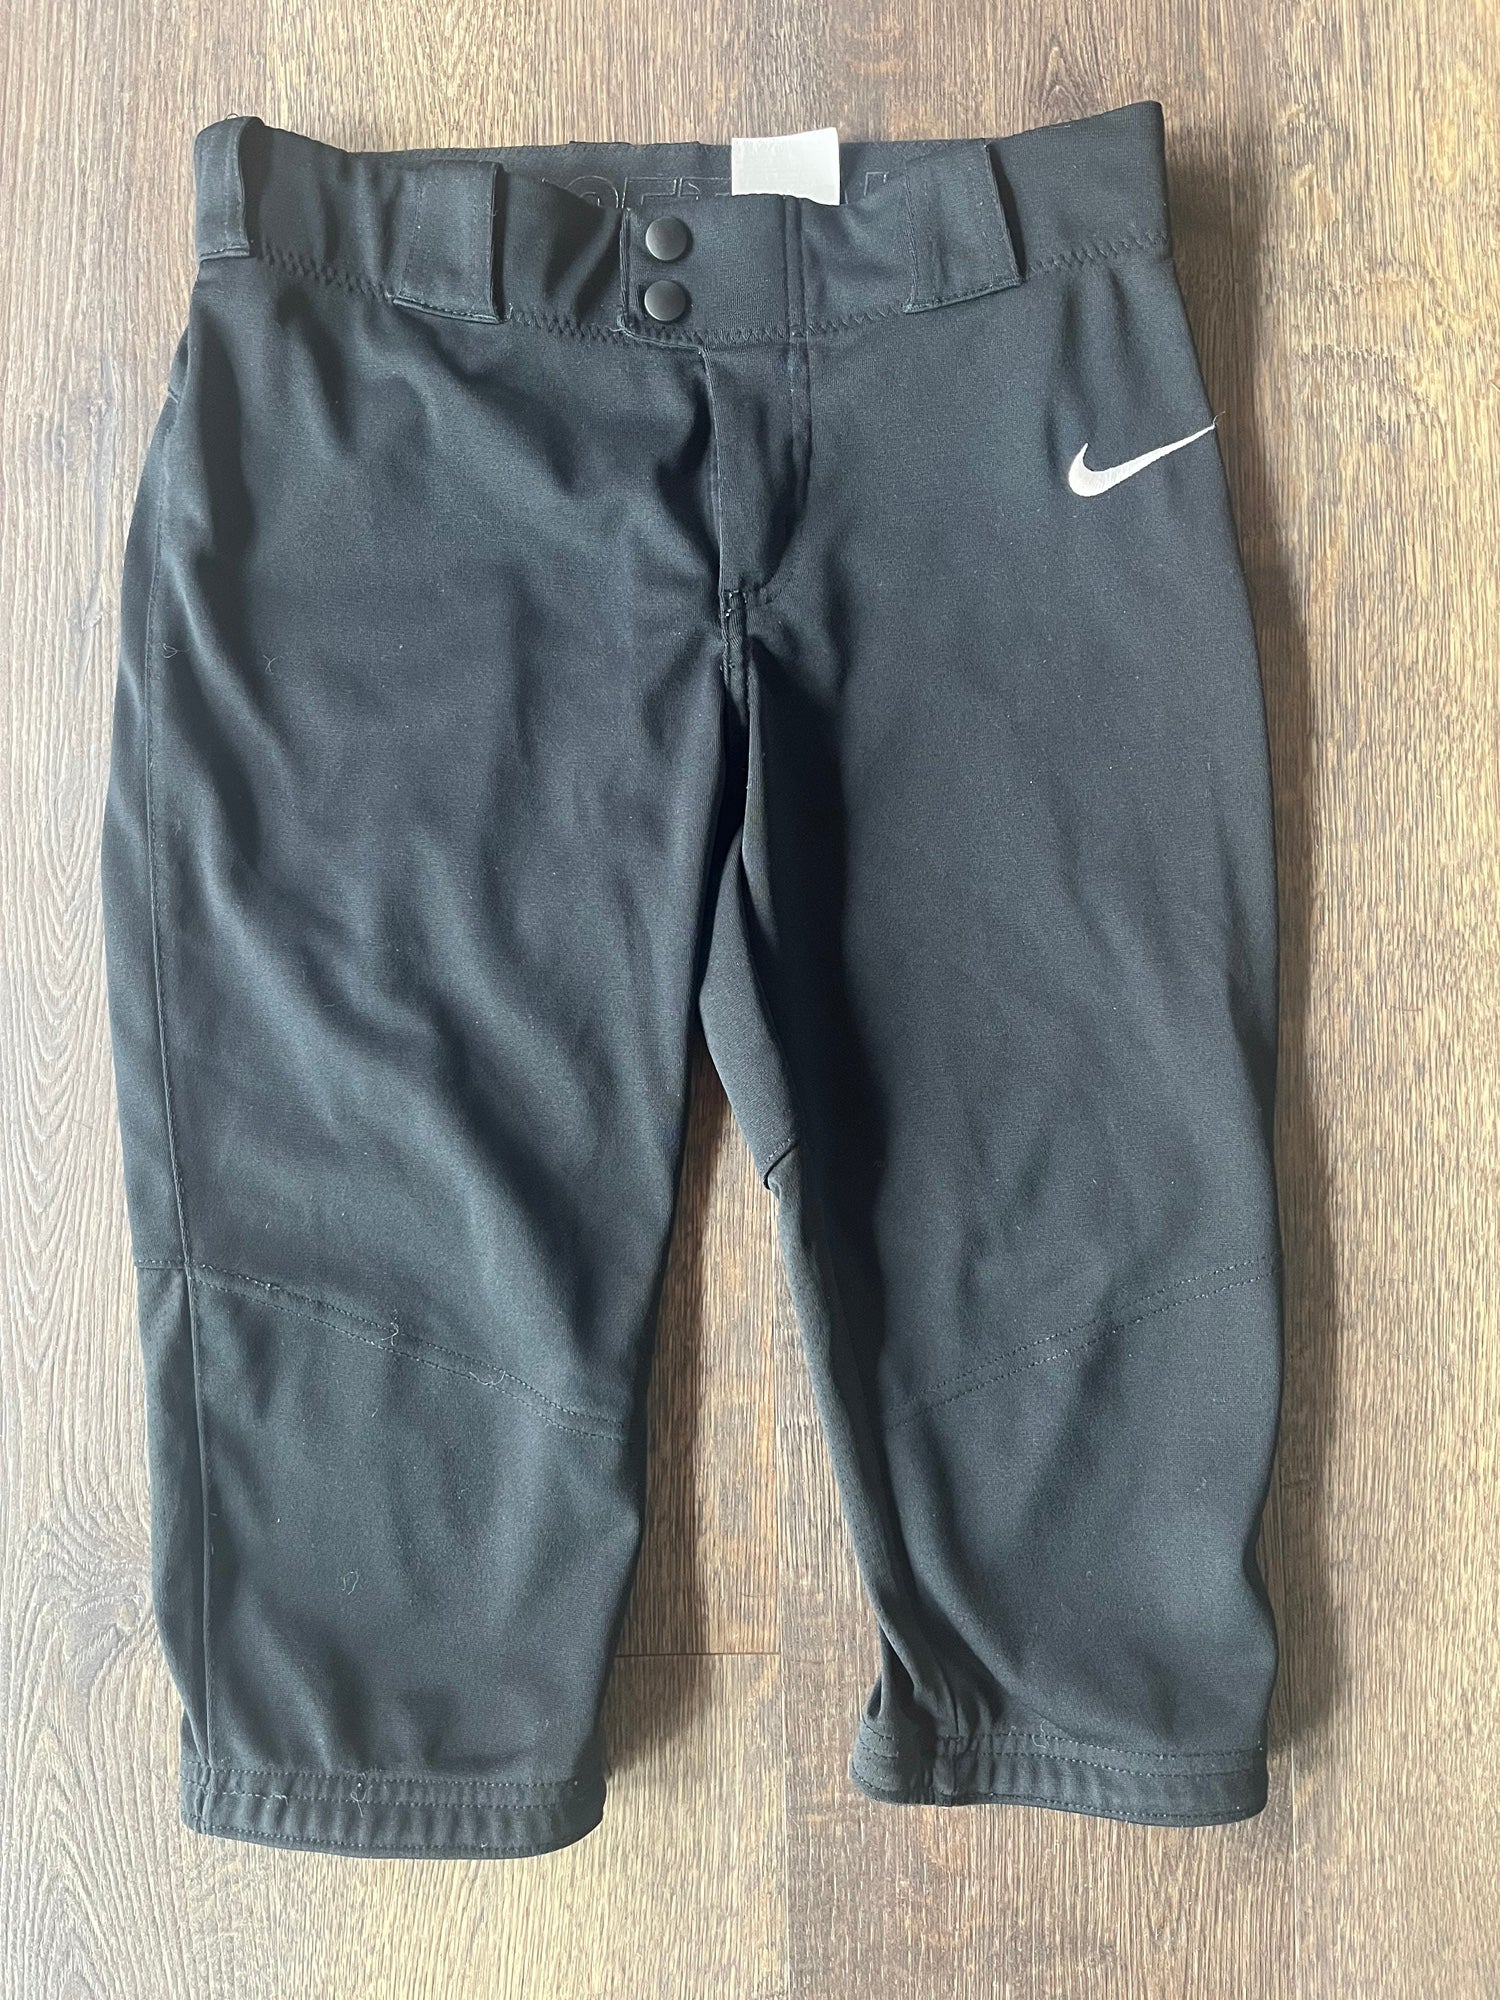 Nike Softball Game Pants  Used and New on SidelineSwap